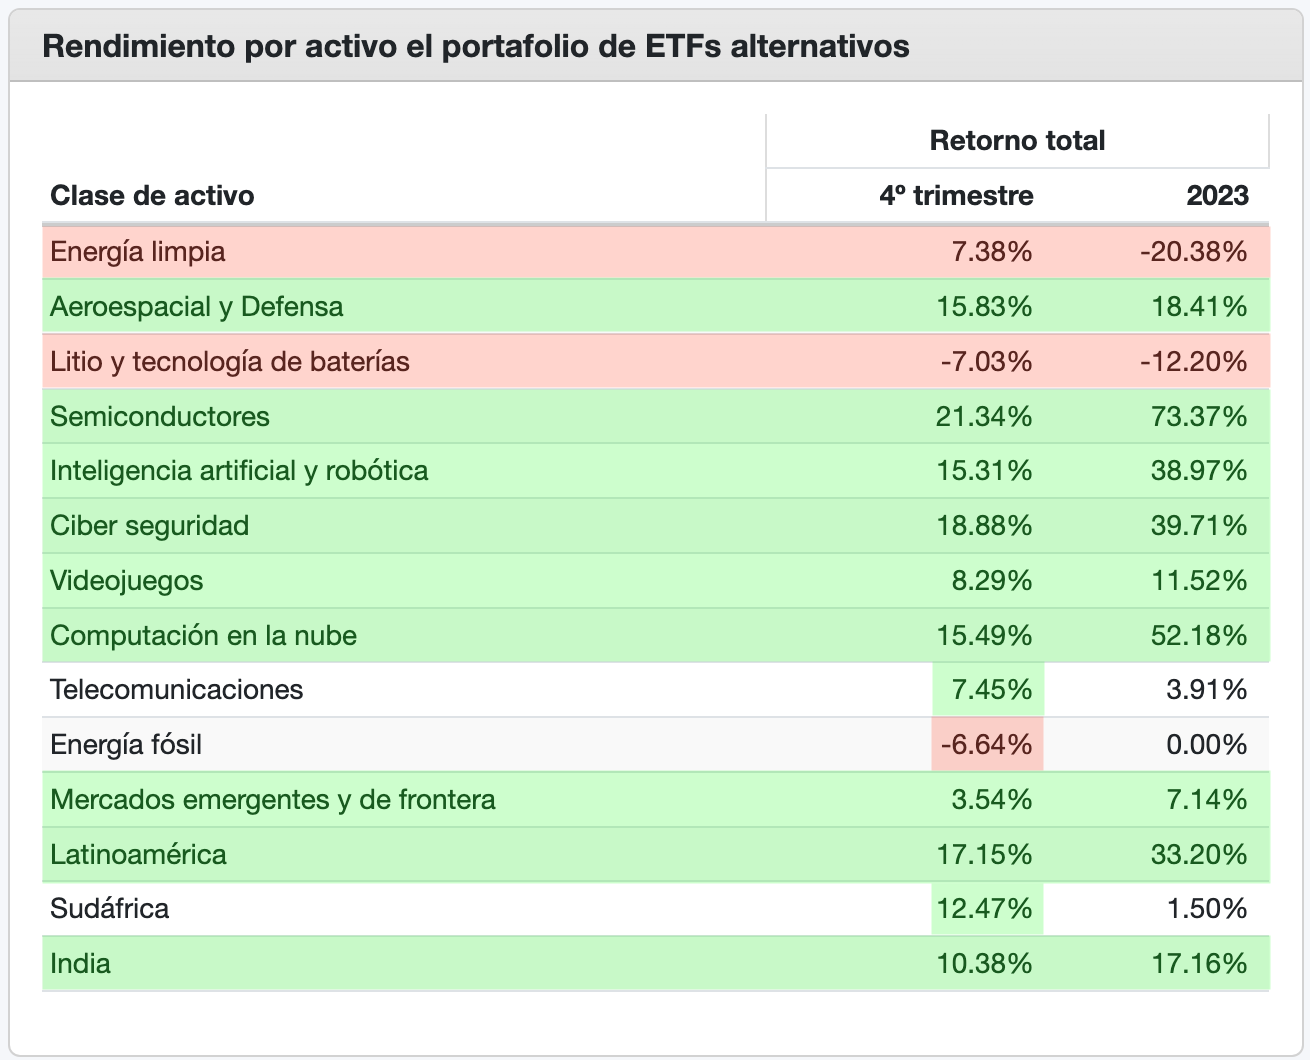 Portafolio de ETFs alternativos: 9.4% en USD en 3 meses